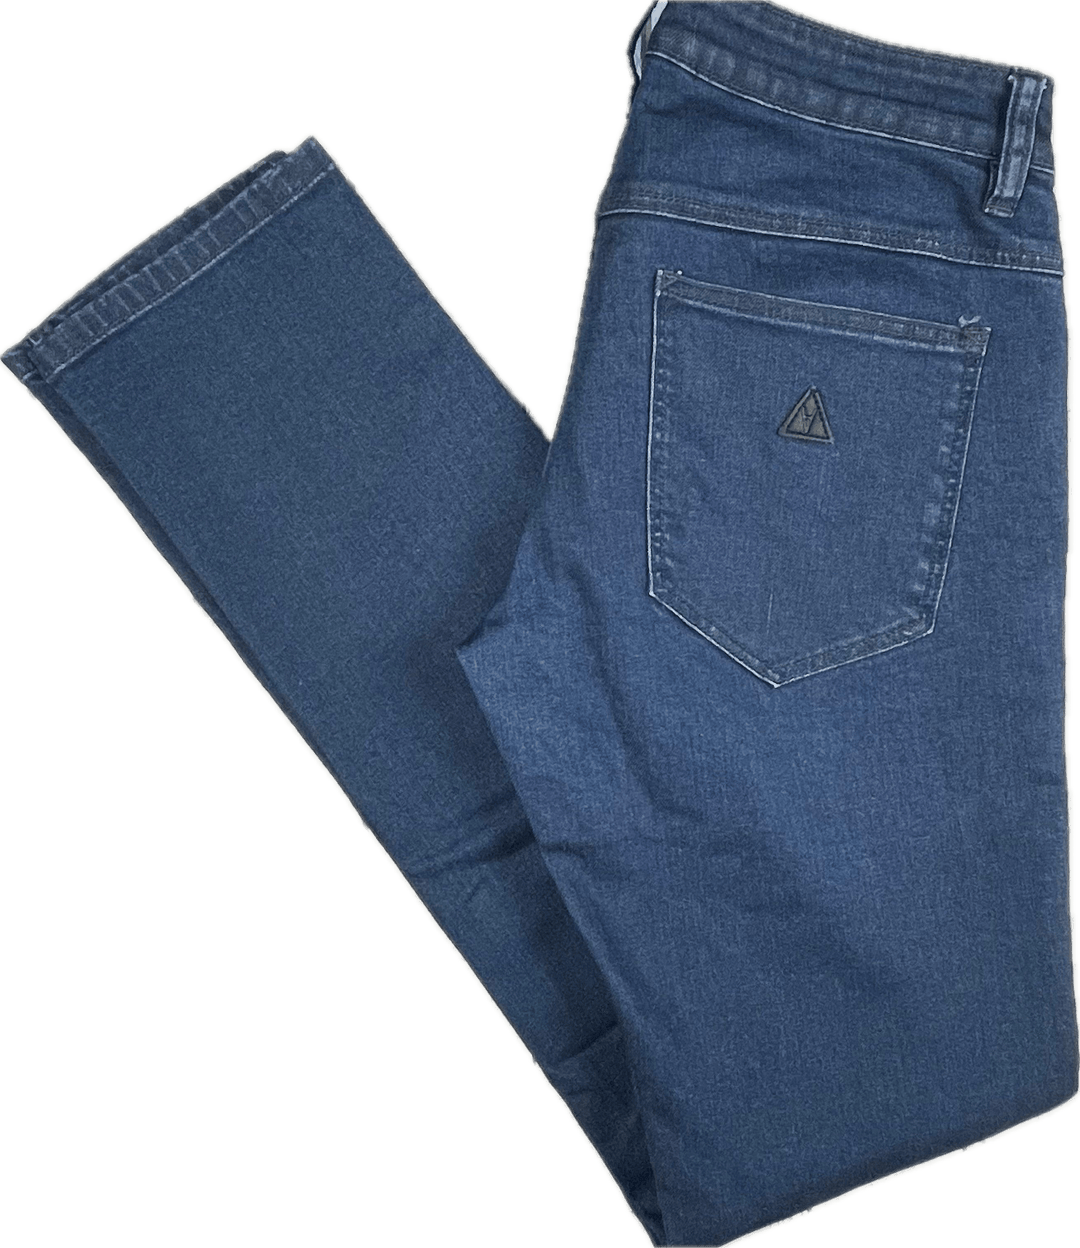 A Brand Men's Classic Straight Leg Jeans - Size 30 - Jean Pool